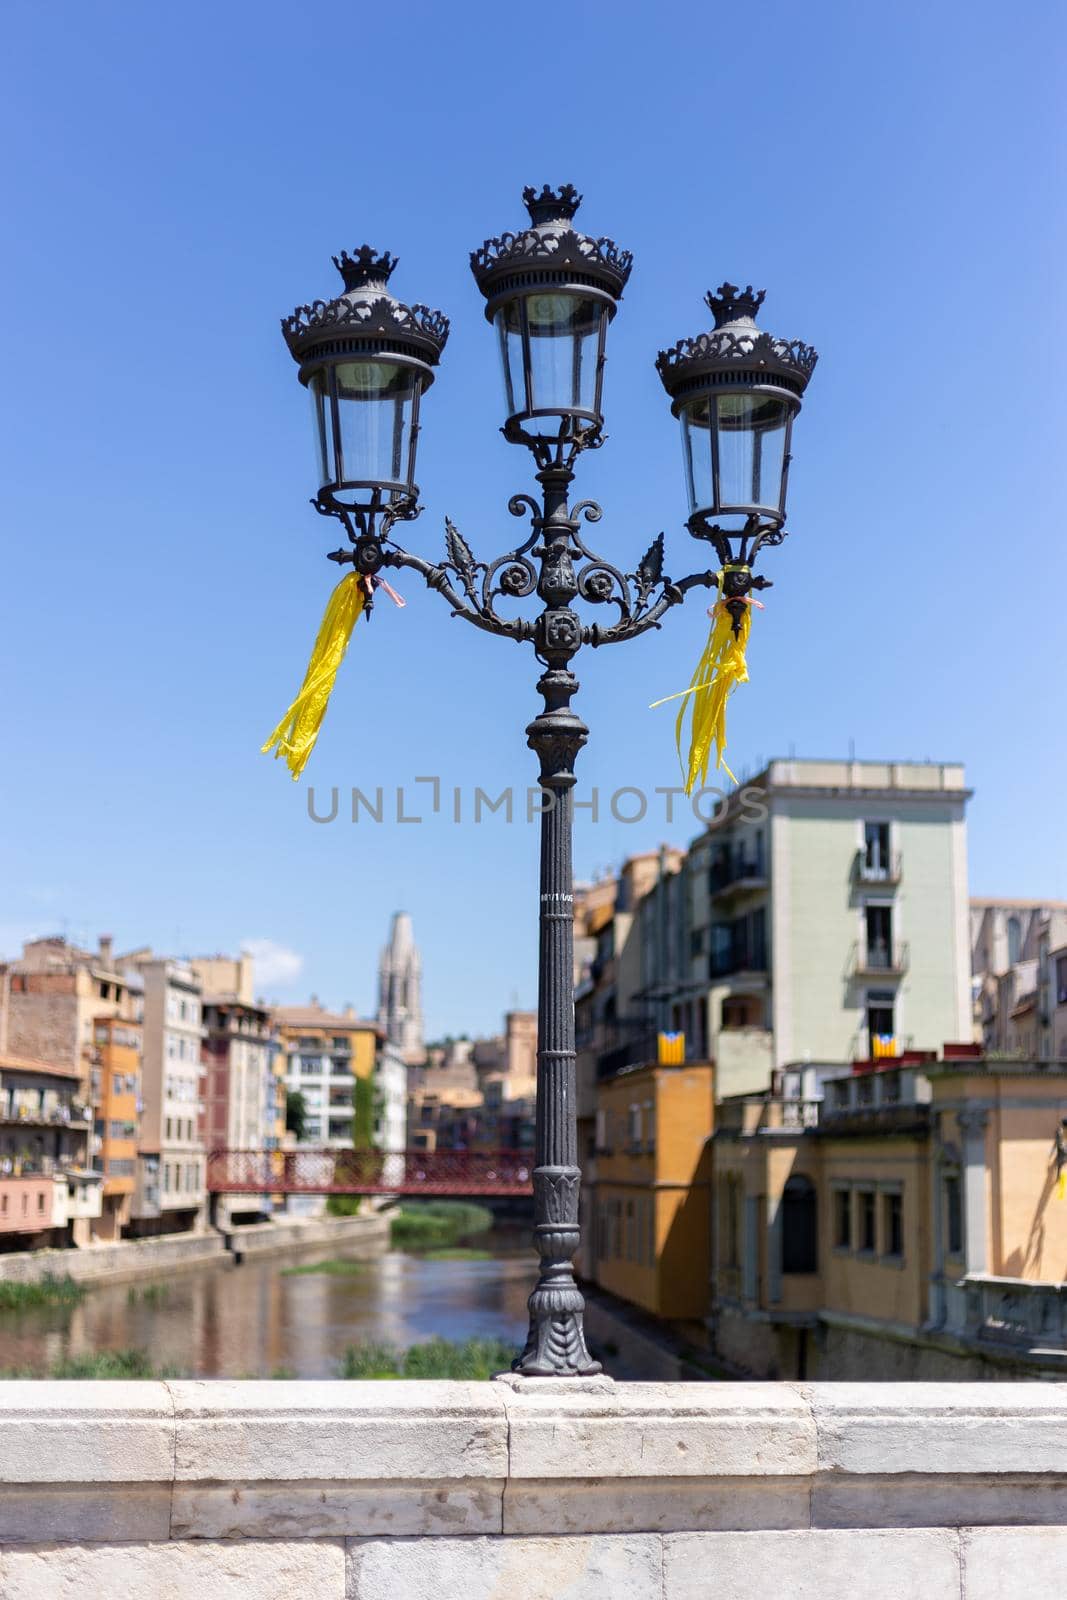 Ornate street lamp in the Spanish city of Girona